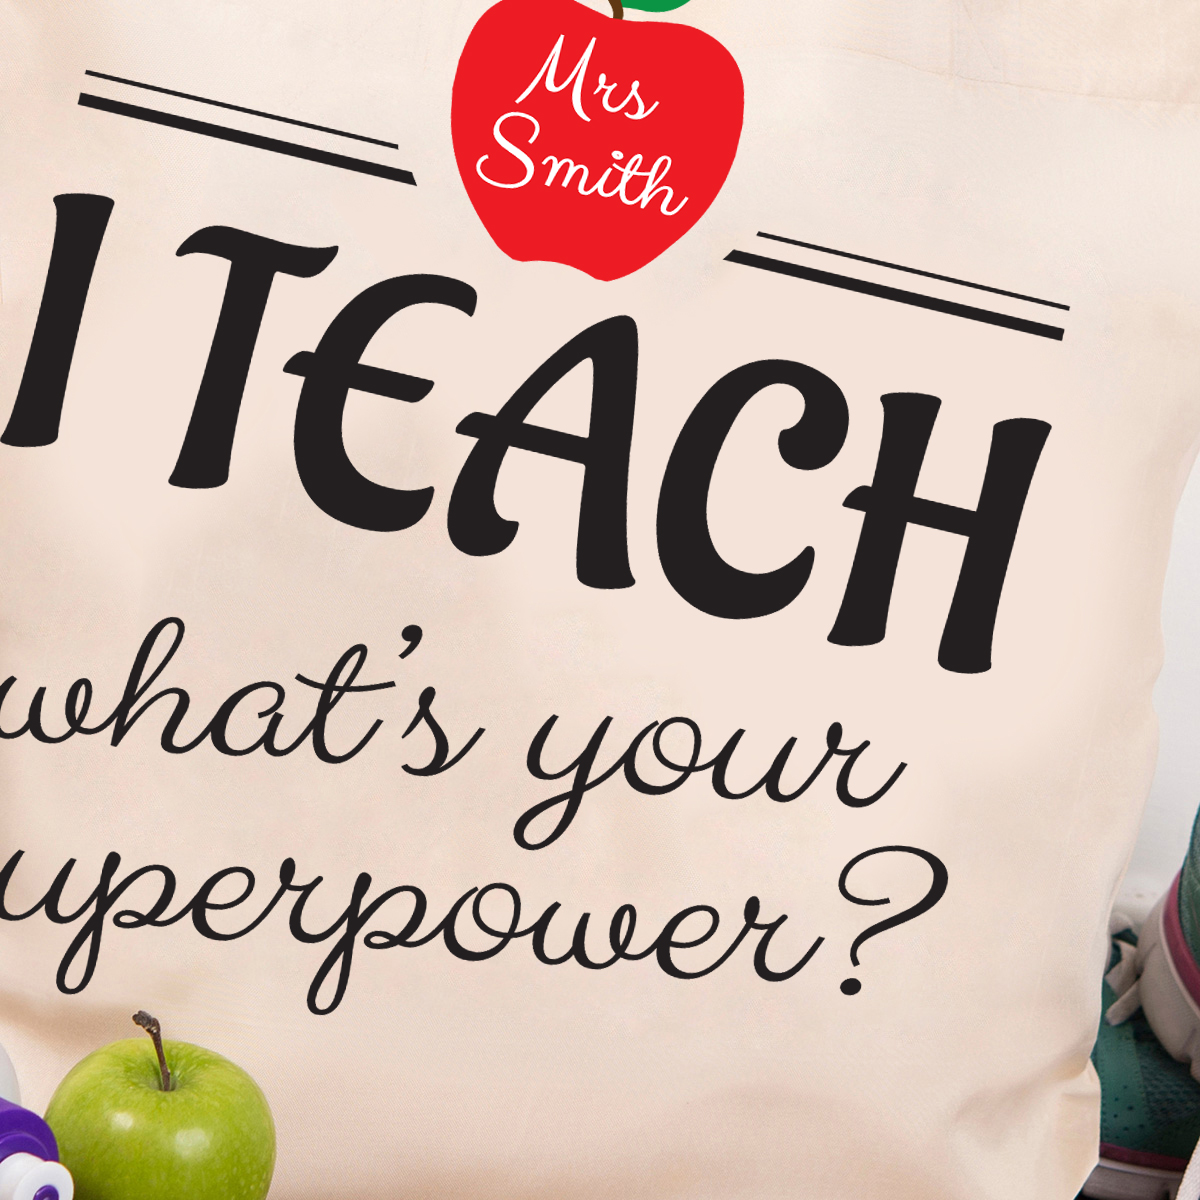 Personalised Tote Bag - I Teach